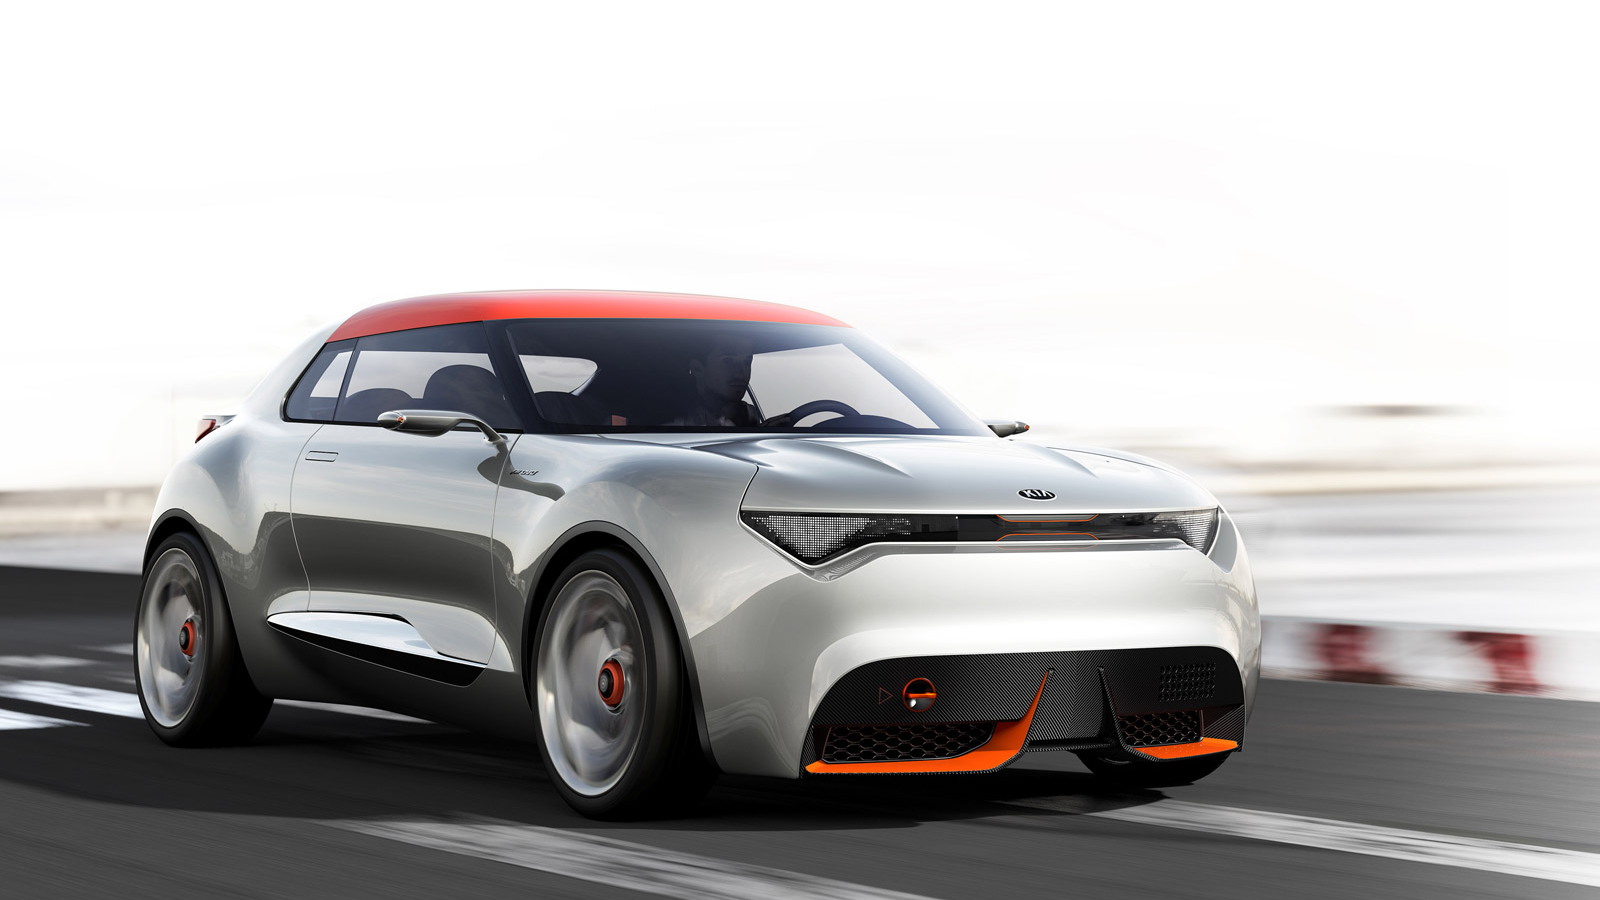 Kia Provo concept car